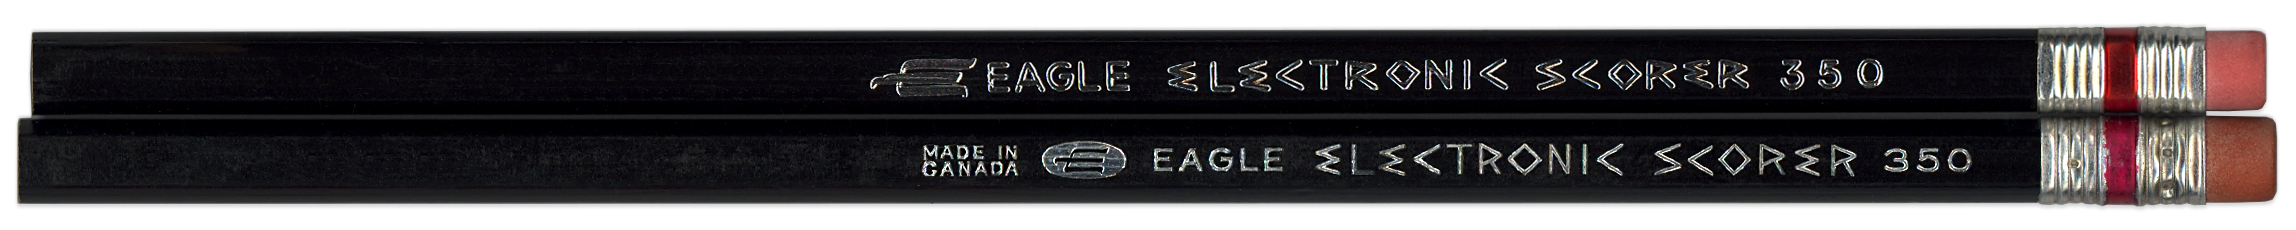 electronic_scorer_by_eagle